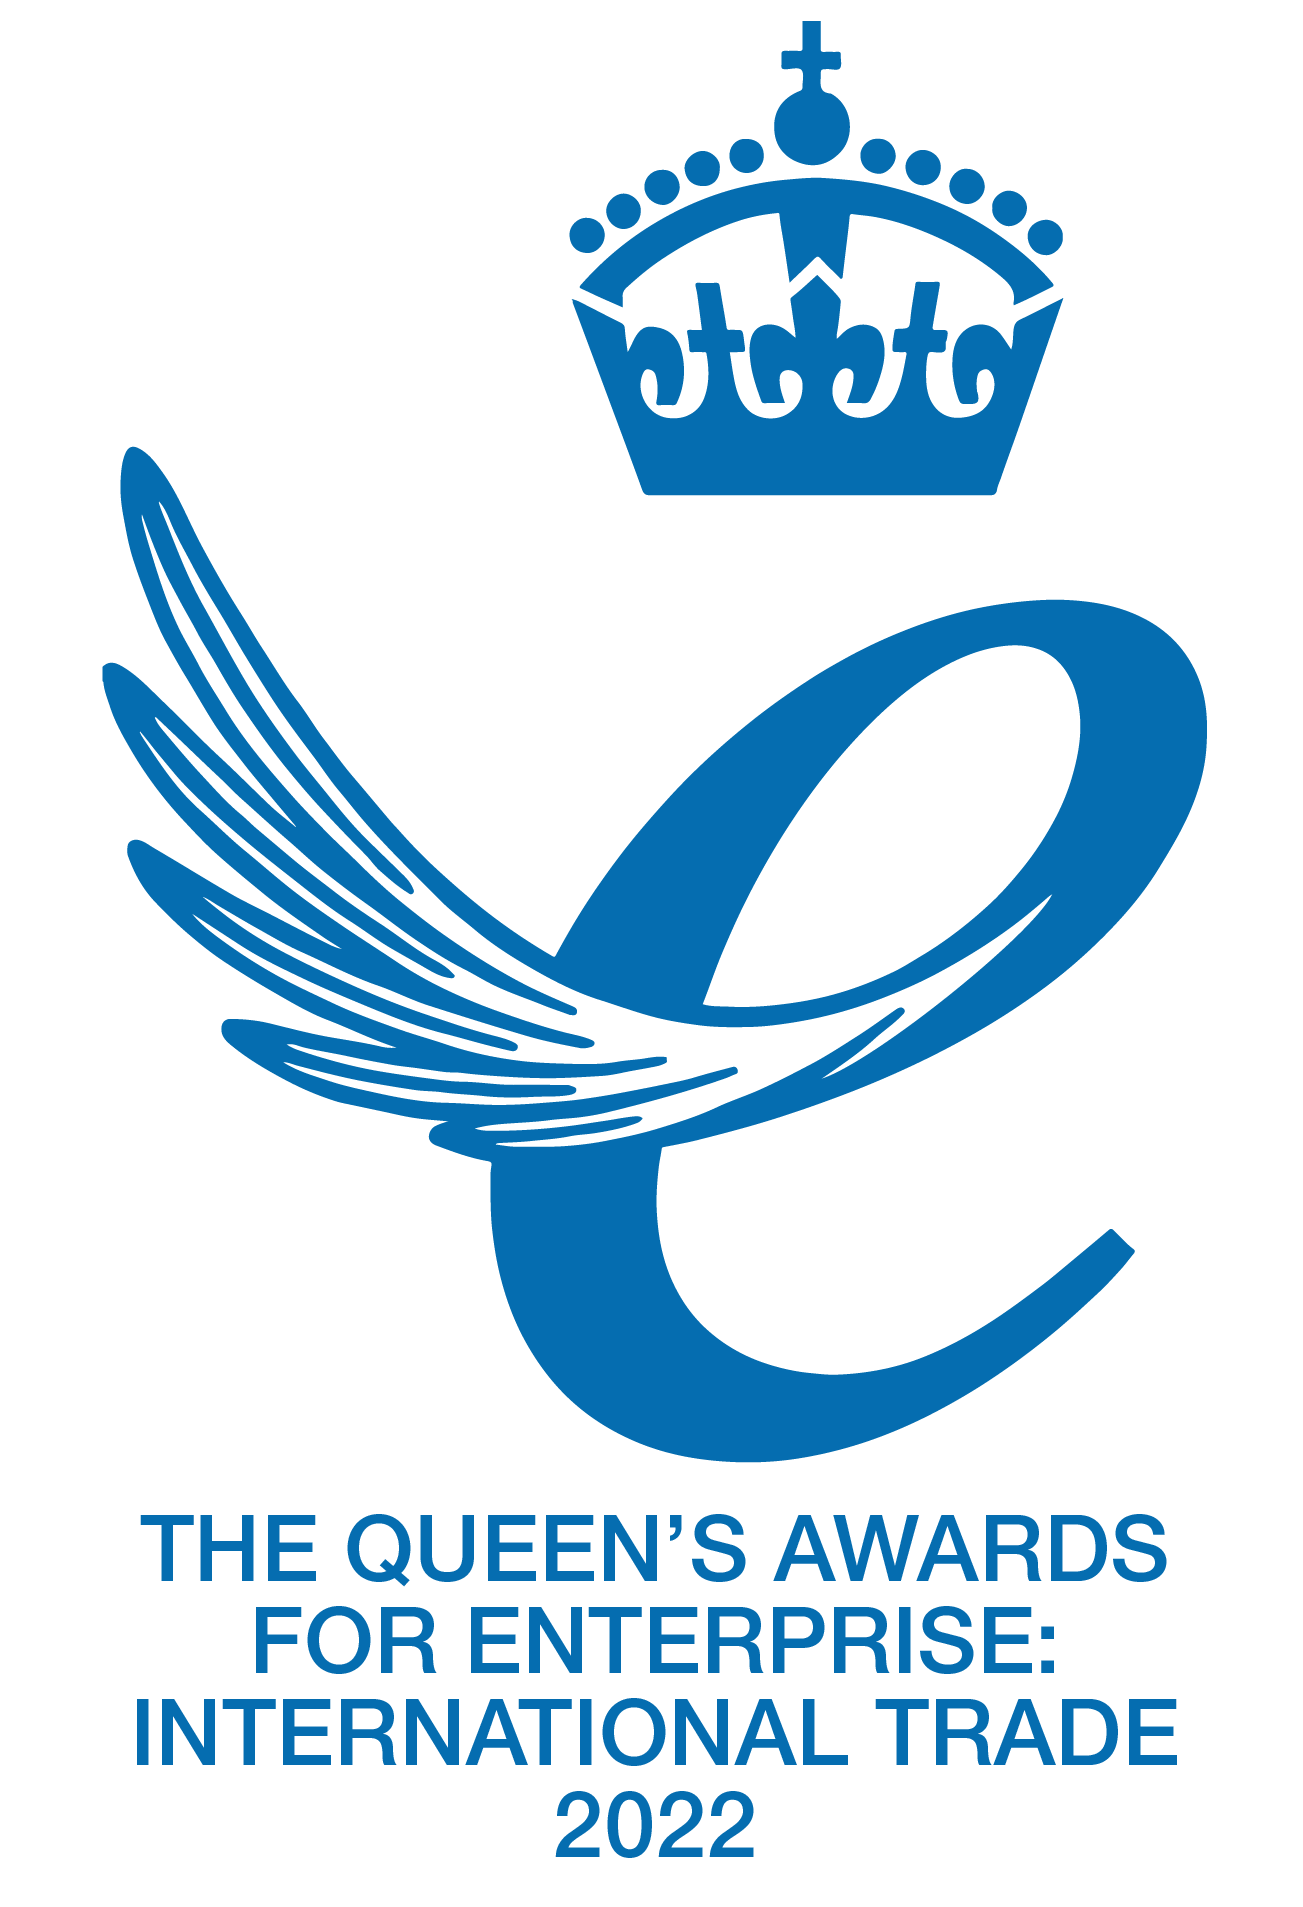 The Queen's Awards for Enterprise: International Trade 2022